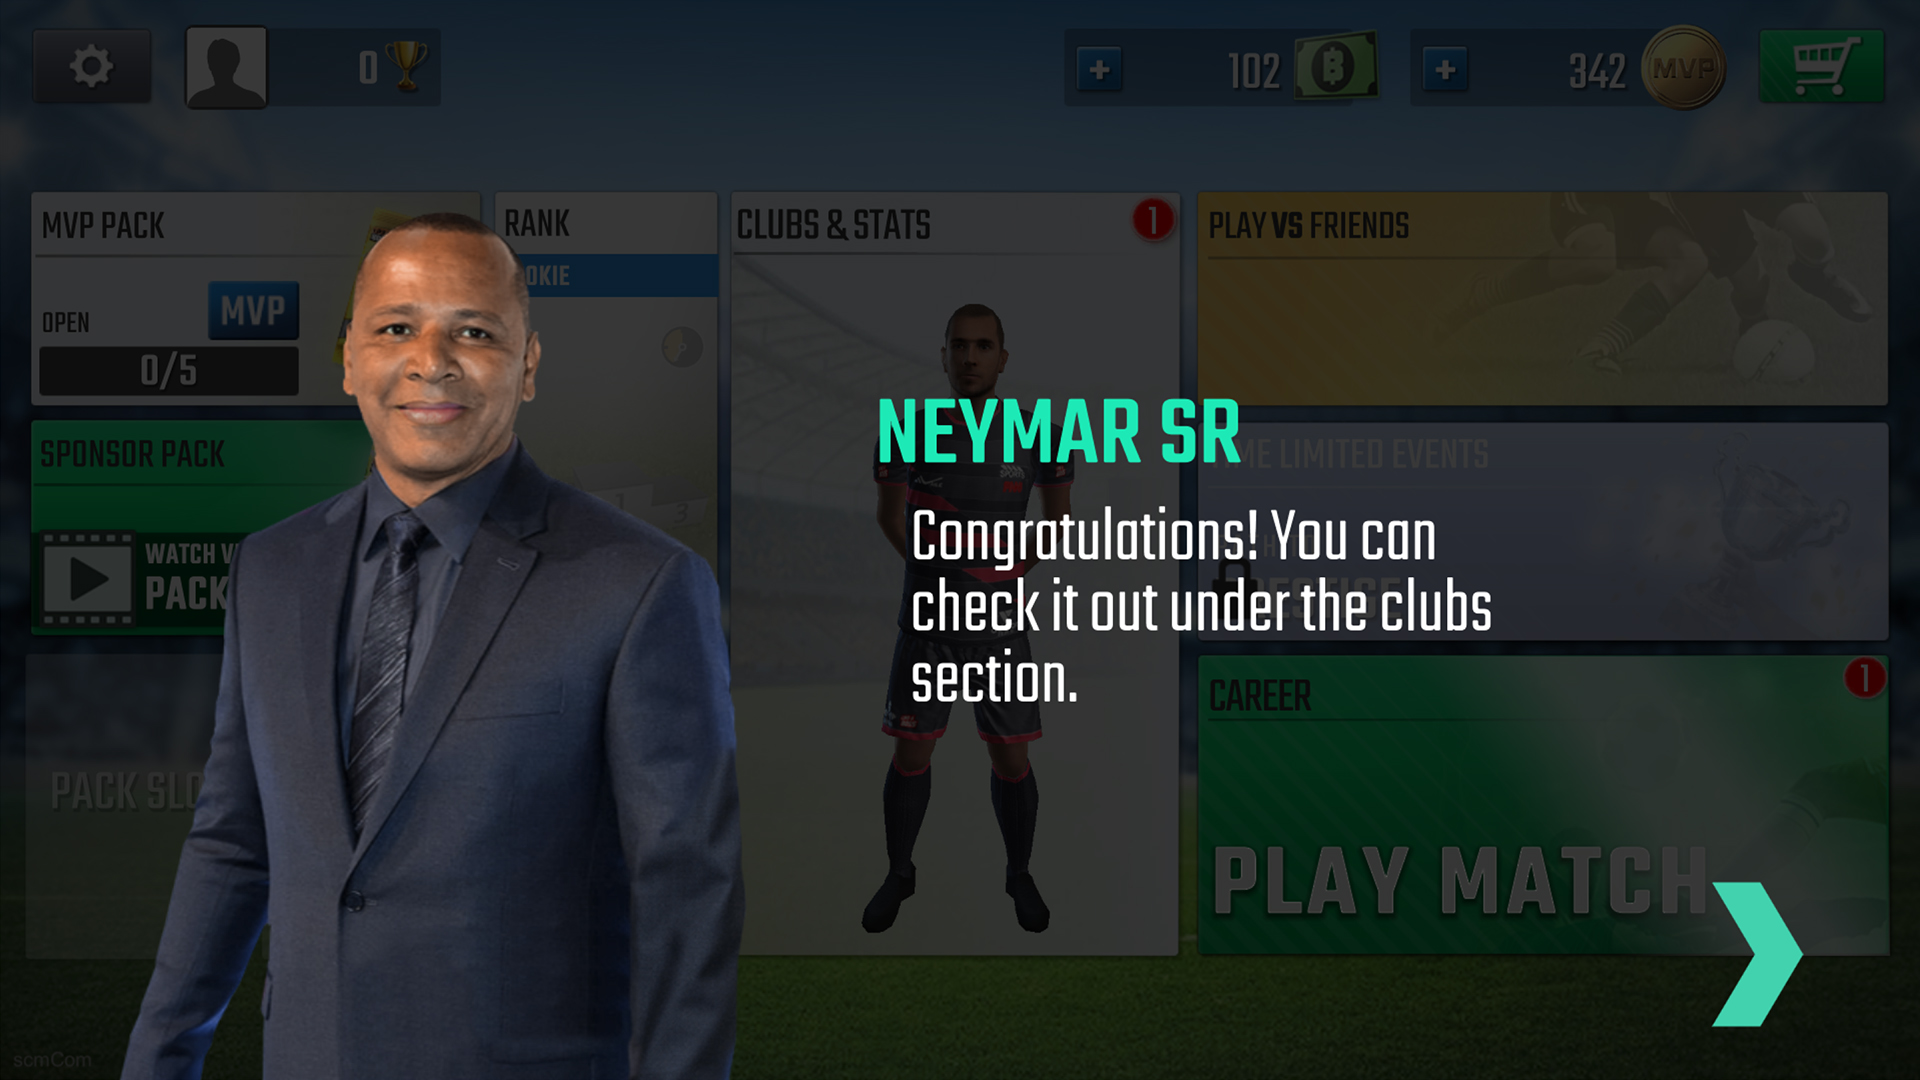 Neymar Sr in the game